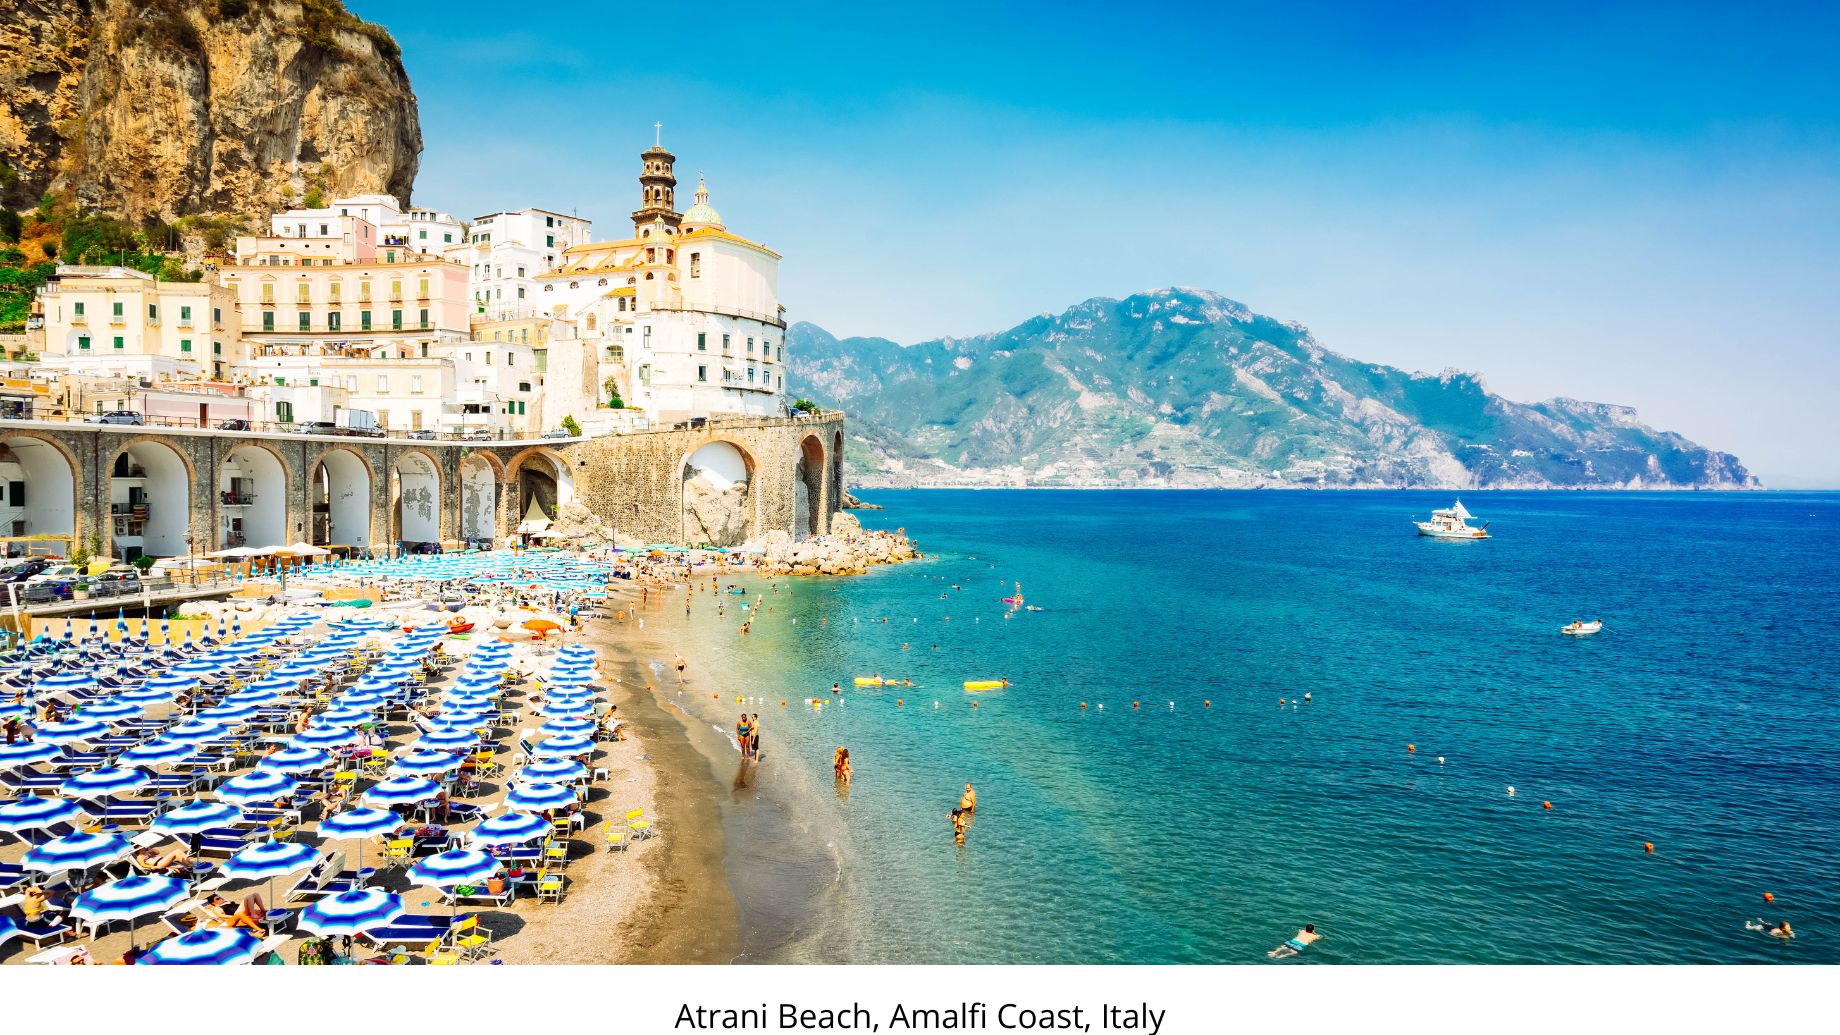 Atrani Beach, Amalfi Coast, Italy